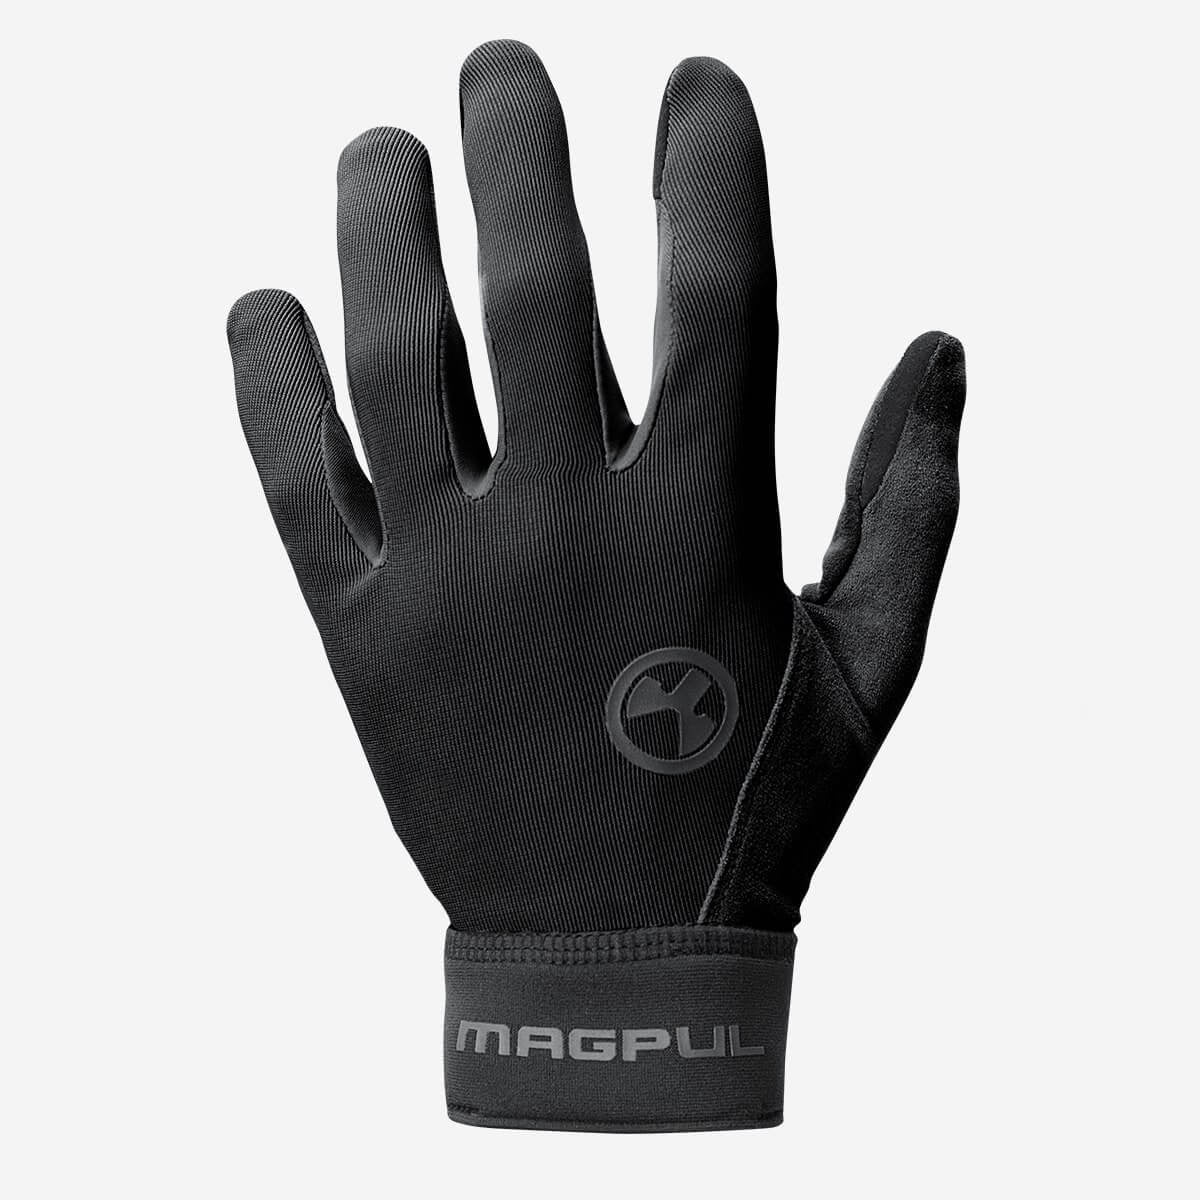 Magpul Technical Glove 2.0 Black Large